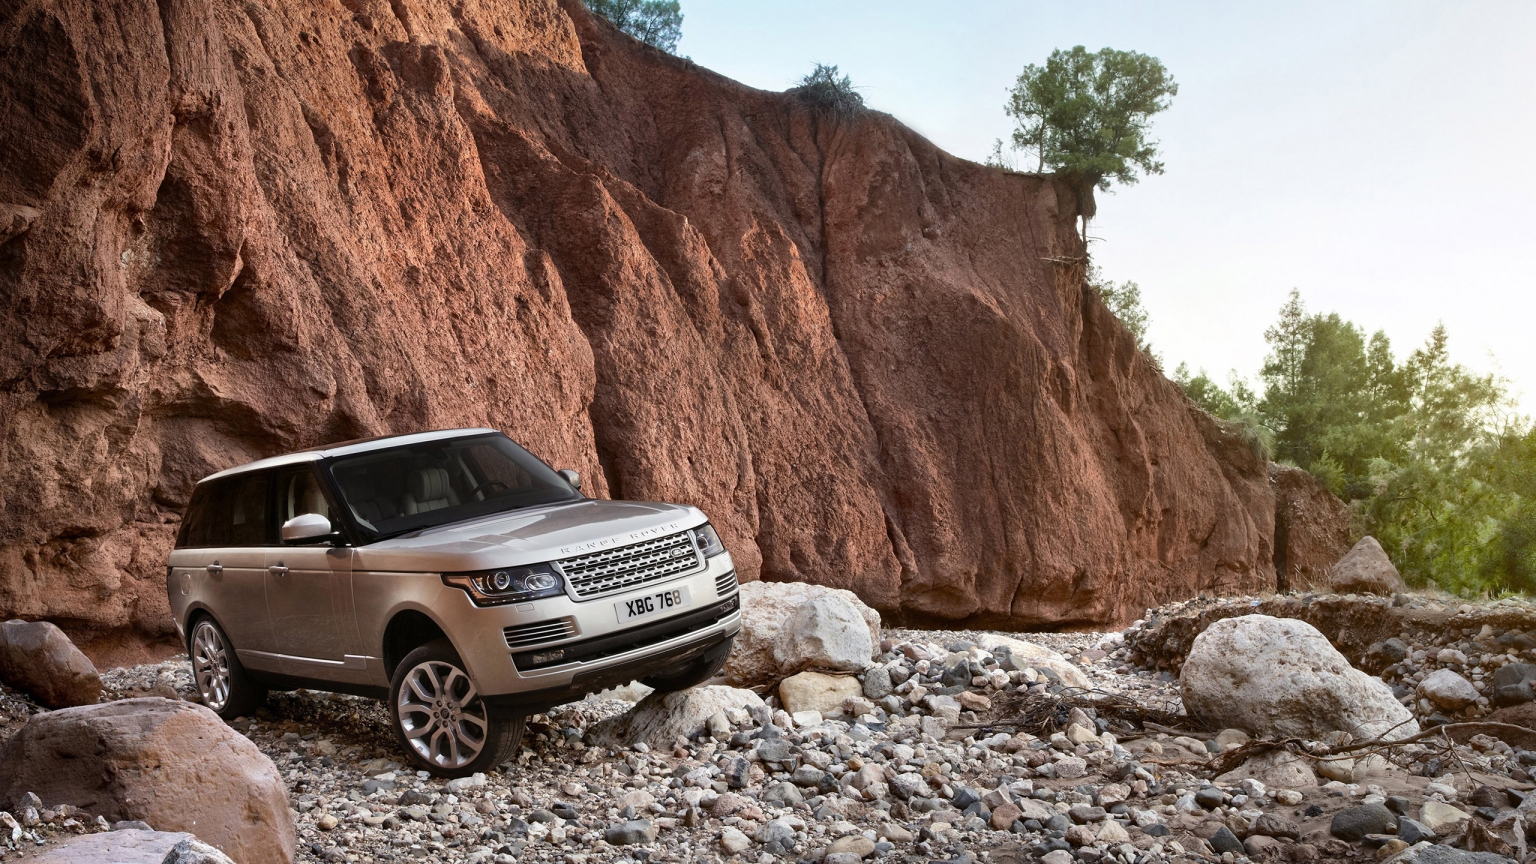 Range Rover on the Rocks for 1536 x 864 HDTV resolution